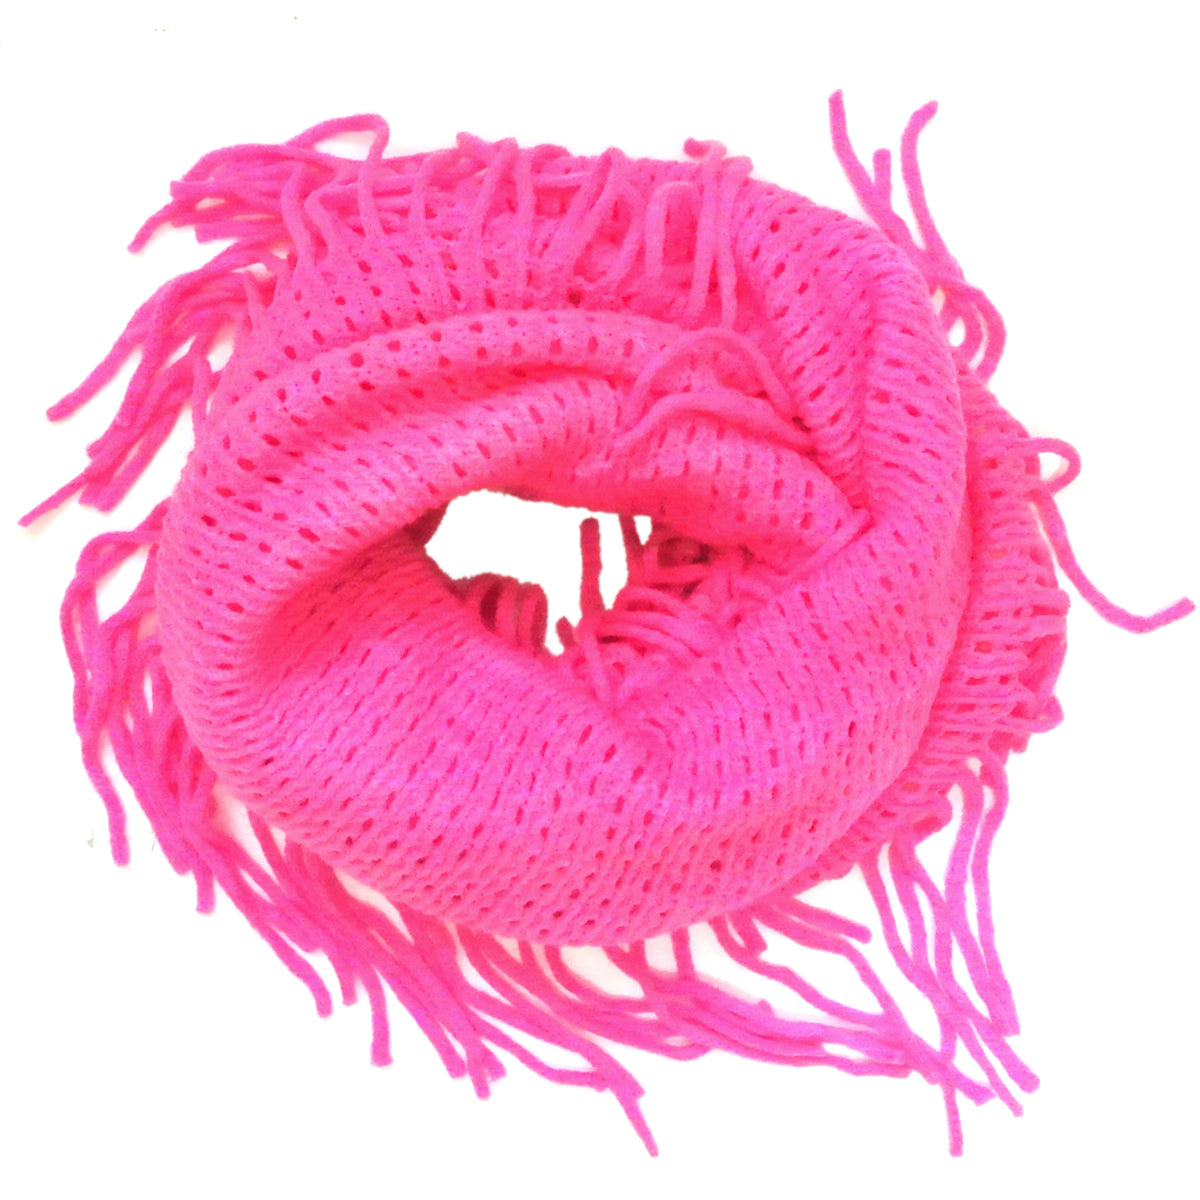 Wrapables Soft Crochet Infinity Scarf with Tassel Trim